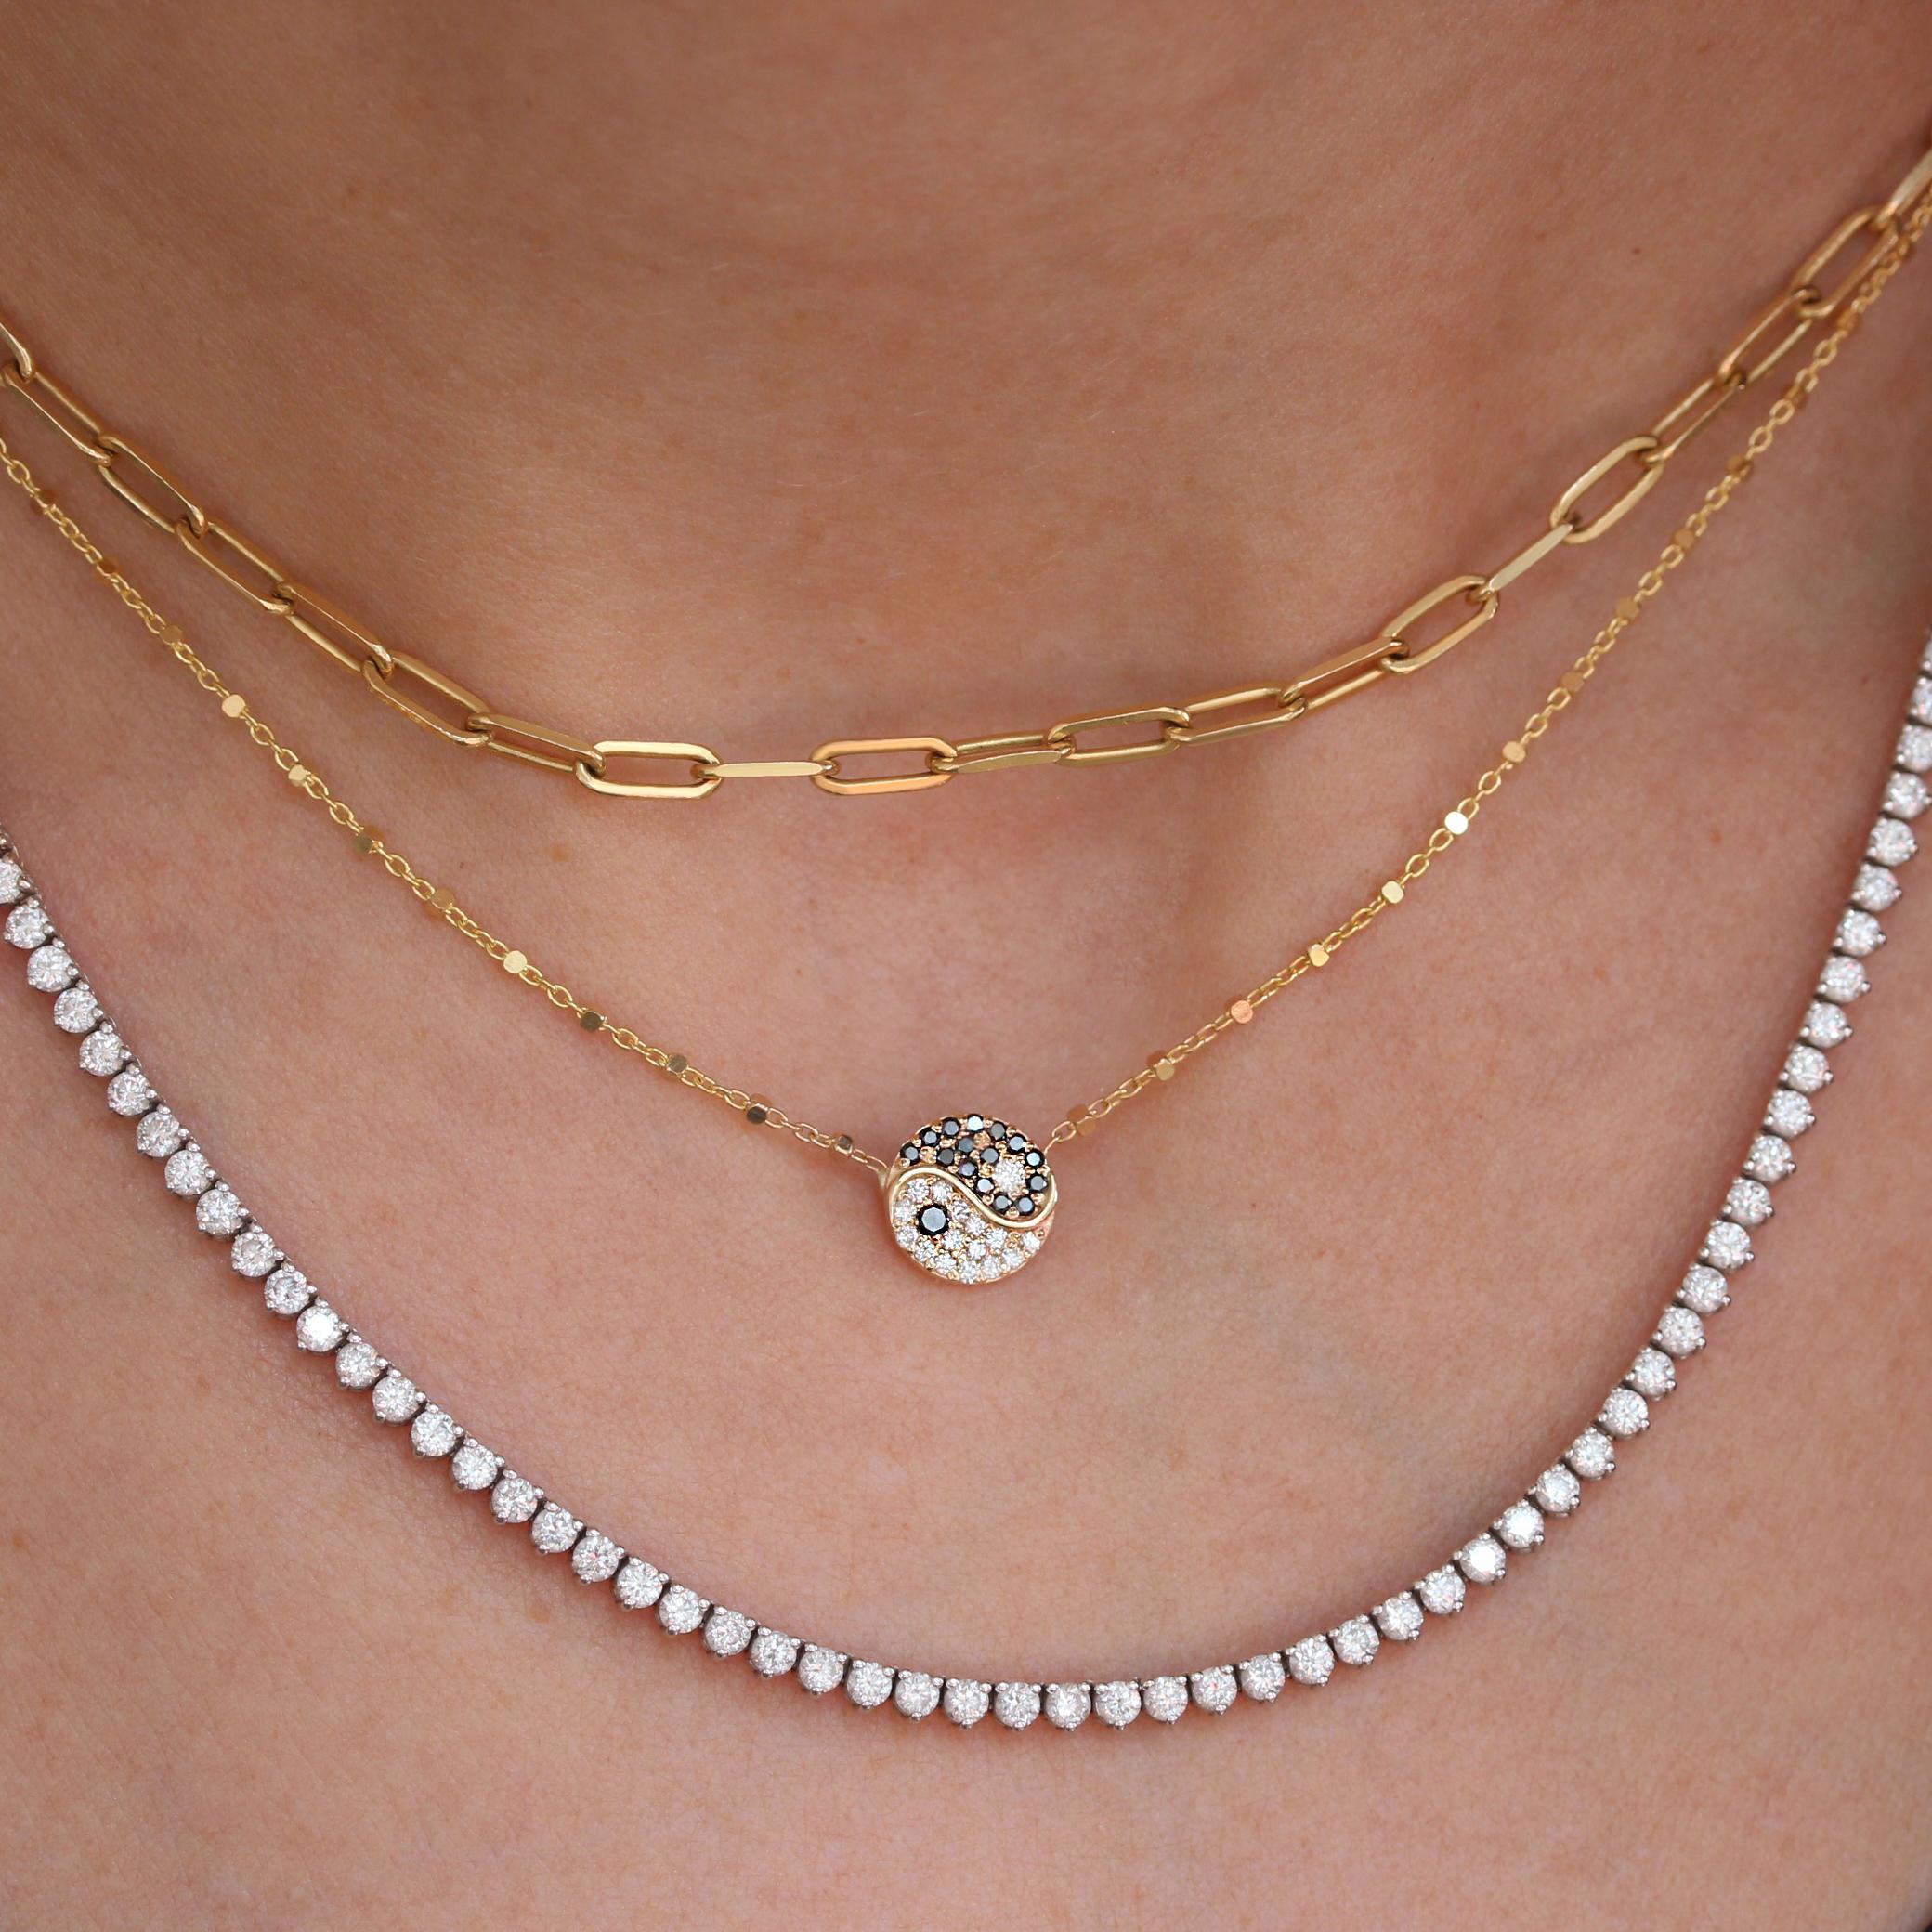 black beads chain with diamond pendant